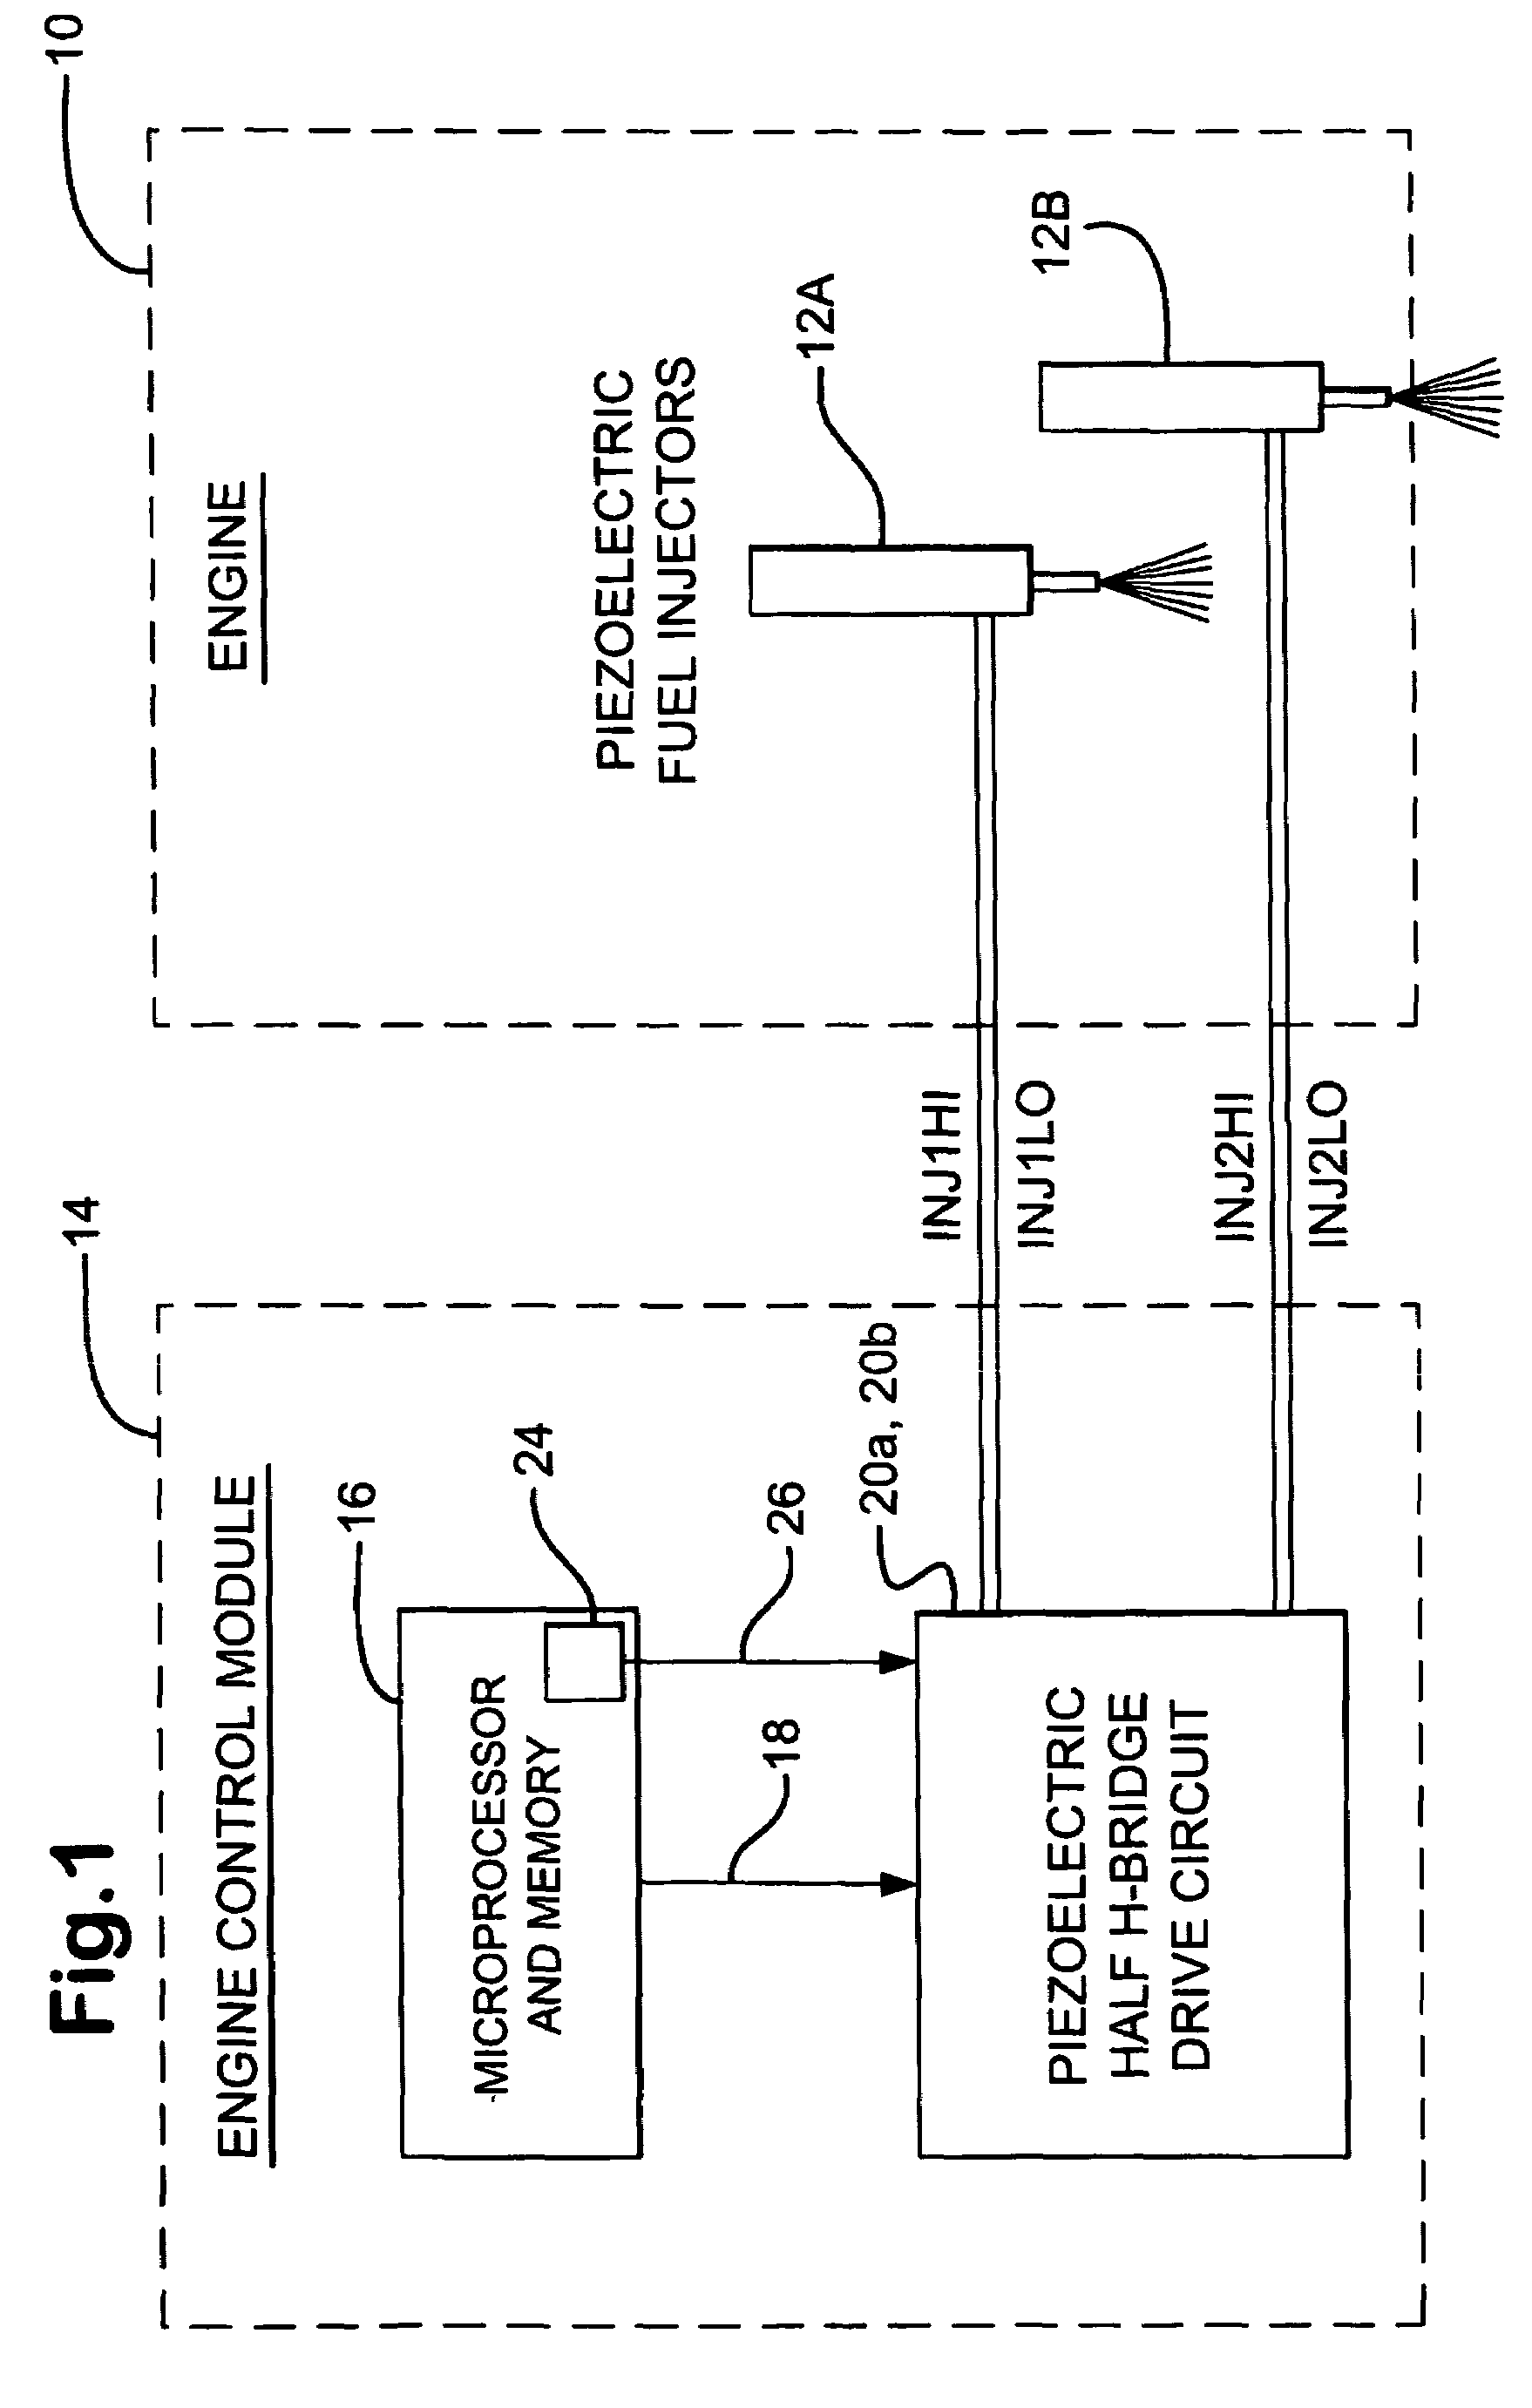 Drive circuit for an injector arrangement